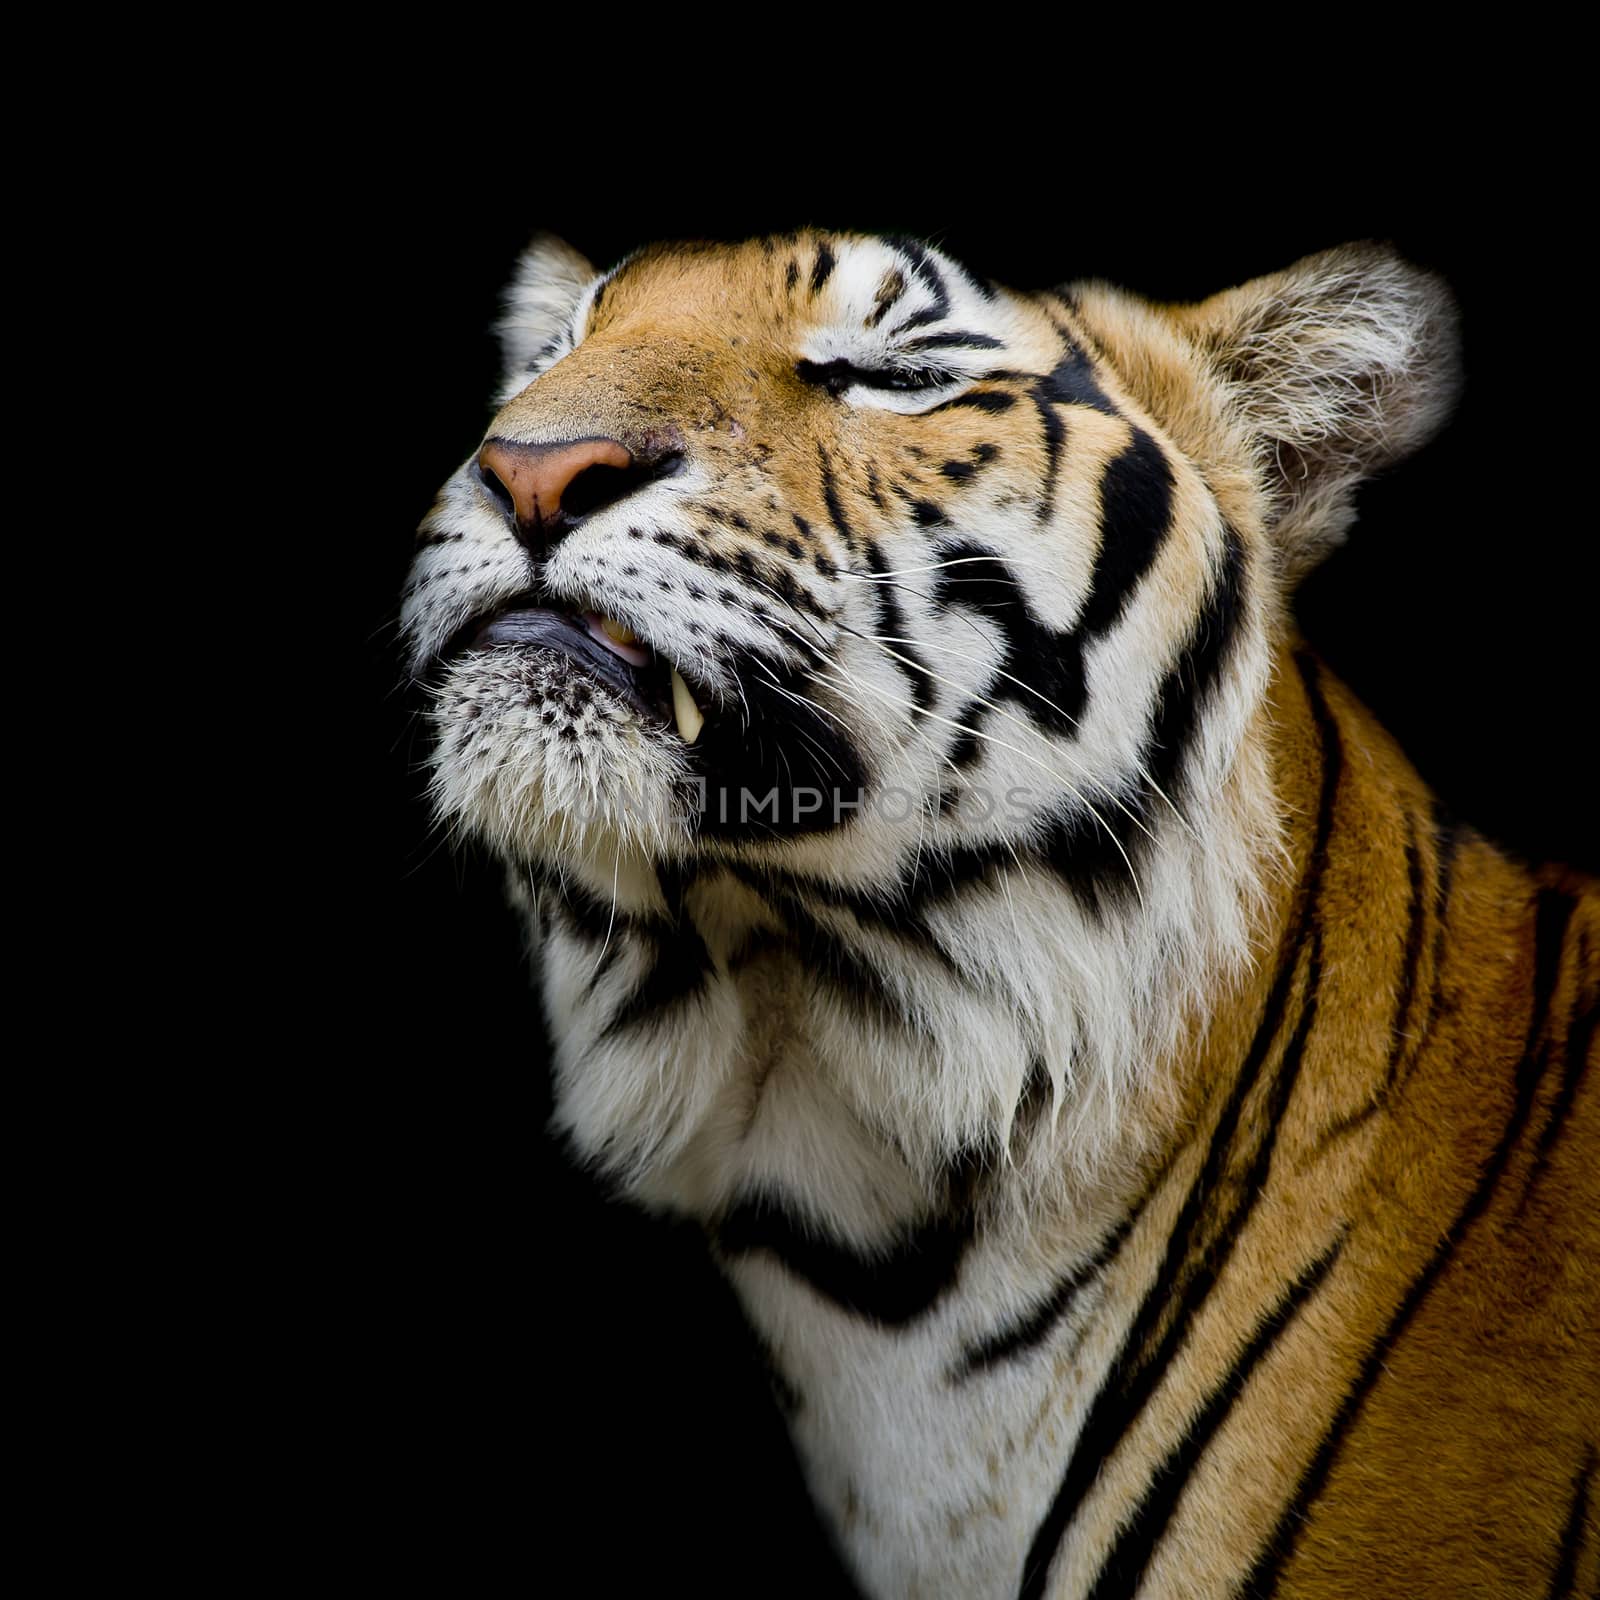 Tiger was happy by art9858